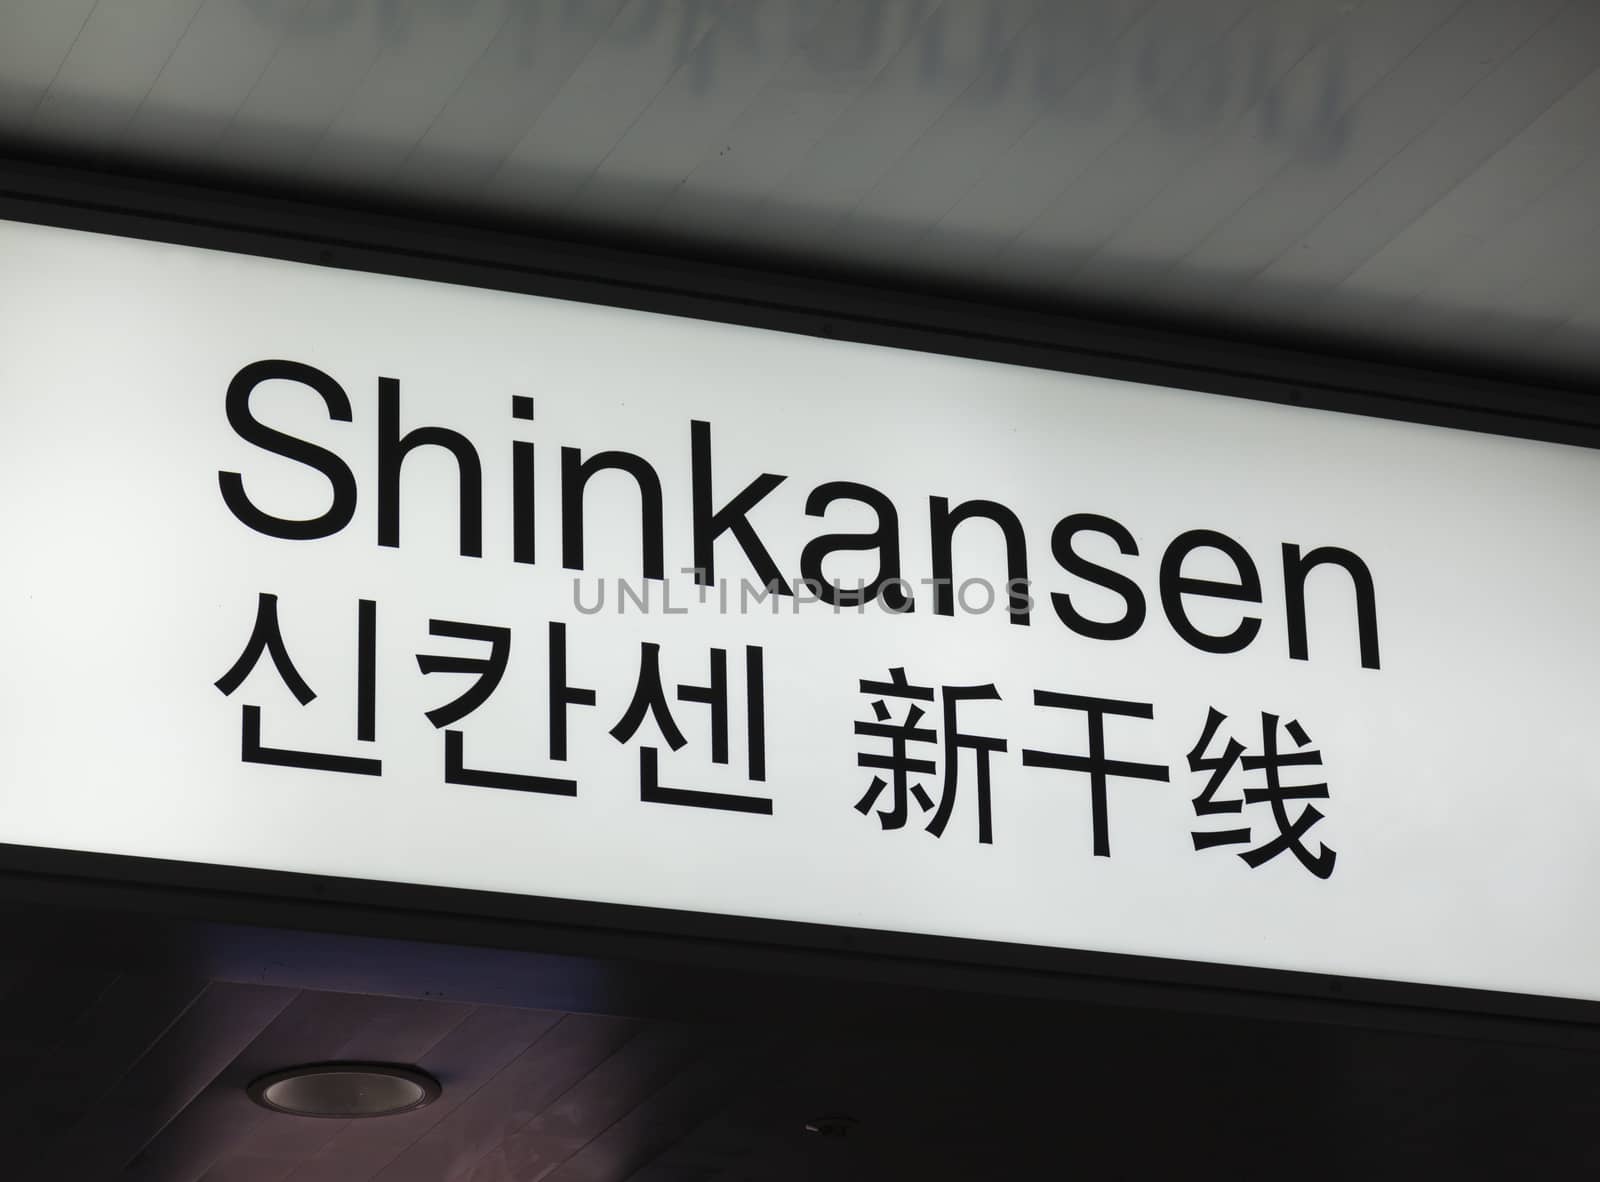 Osaka, Japan - Nov 1: Shinkansen bullet train sign in a train station in Osaka, Japan on Nov 1, 2014. The Shinkansen is a netwrok of high-speed railway lines in Japan.